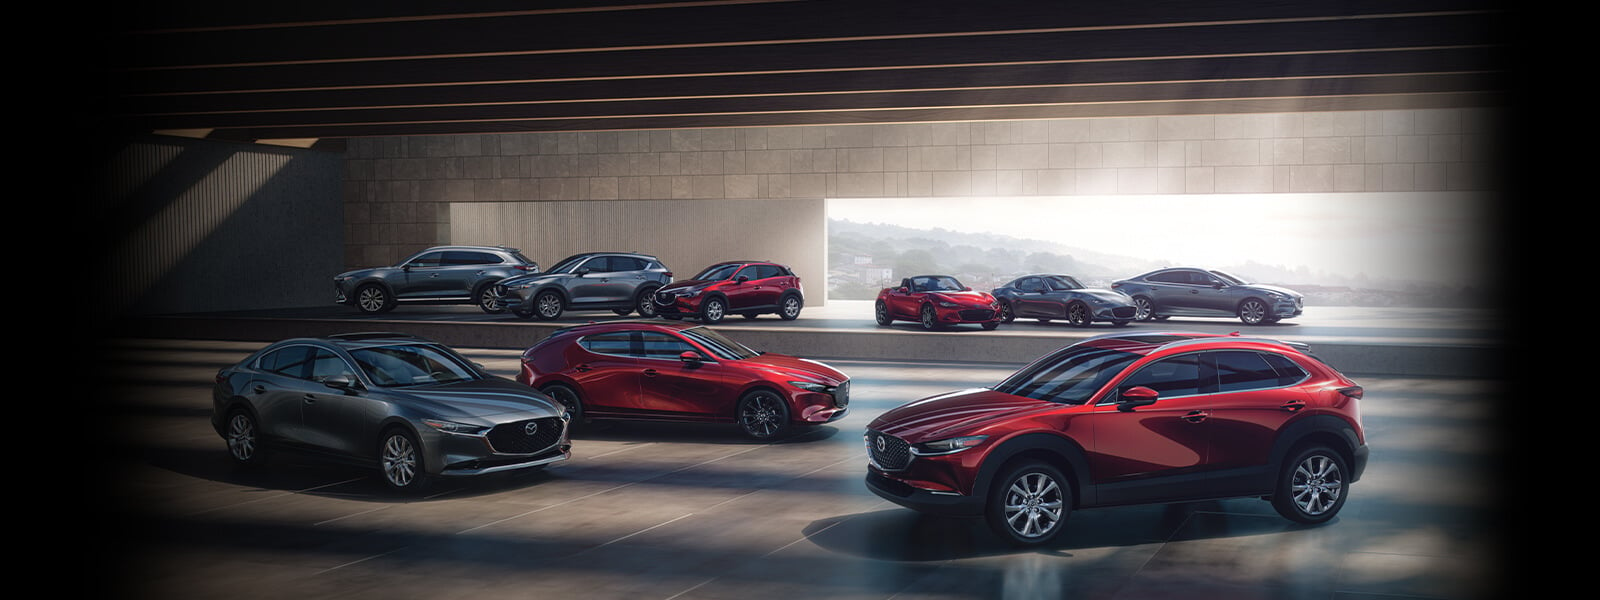 Mazda showroom with CUV, SUV, sedan, hatchback and convertible models